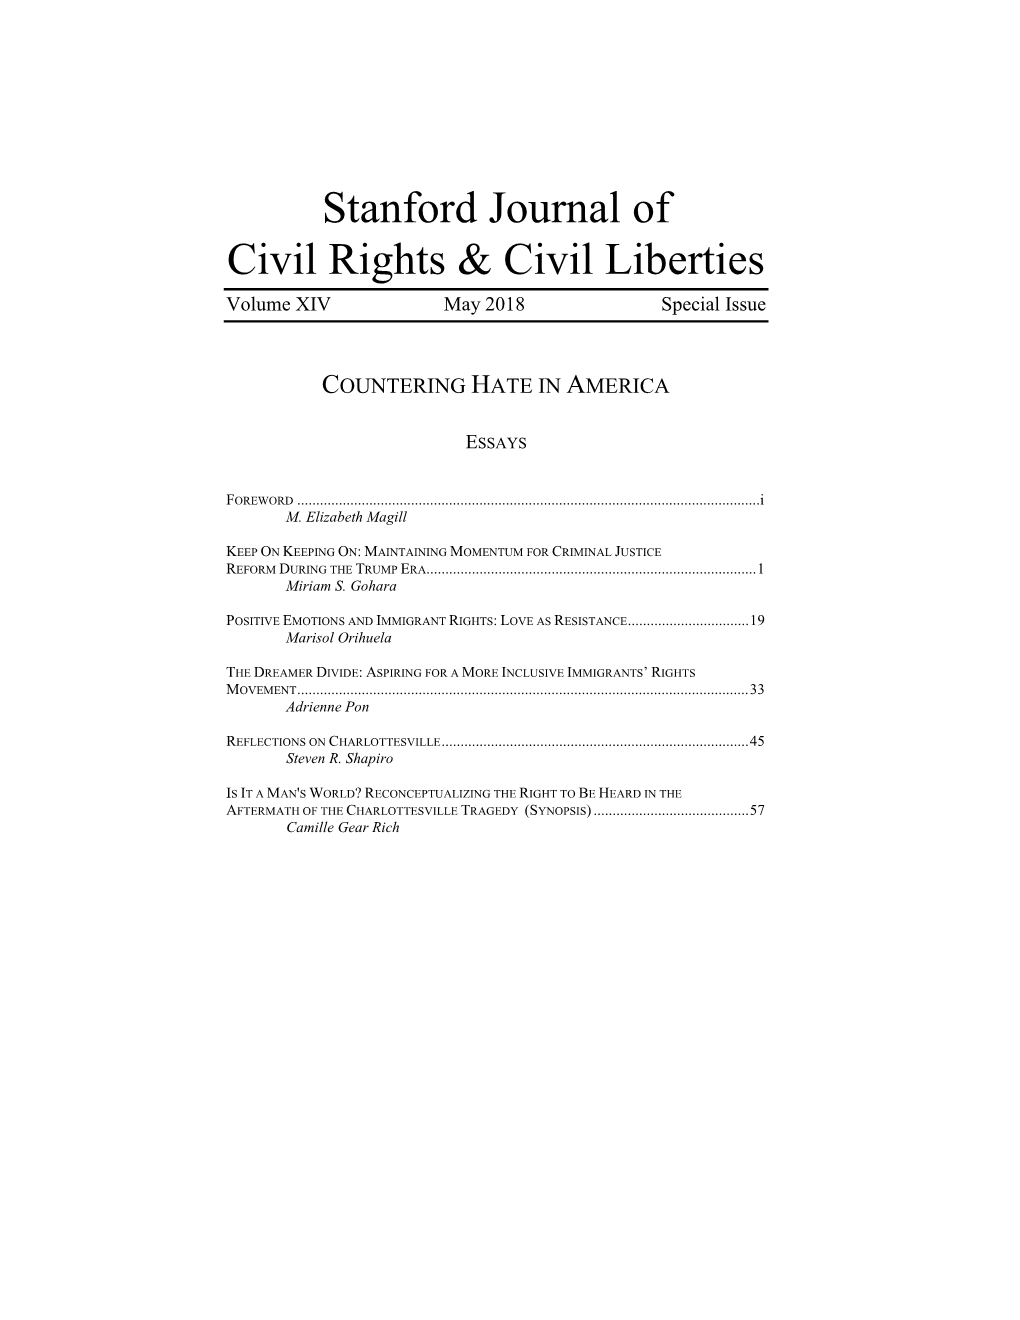 Stanford Journal of Civil Rights & Civil Liberties